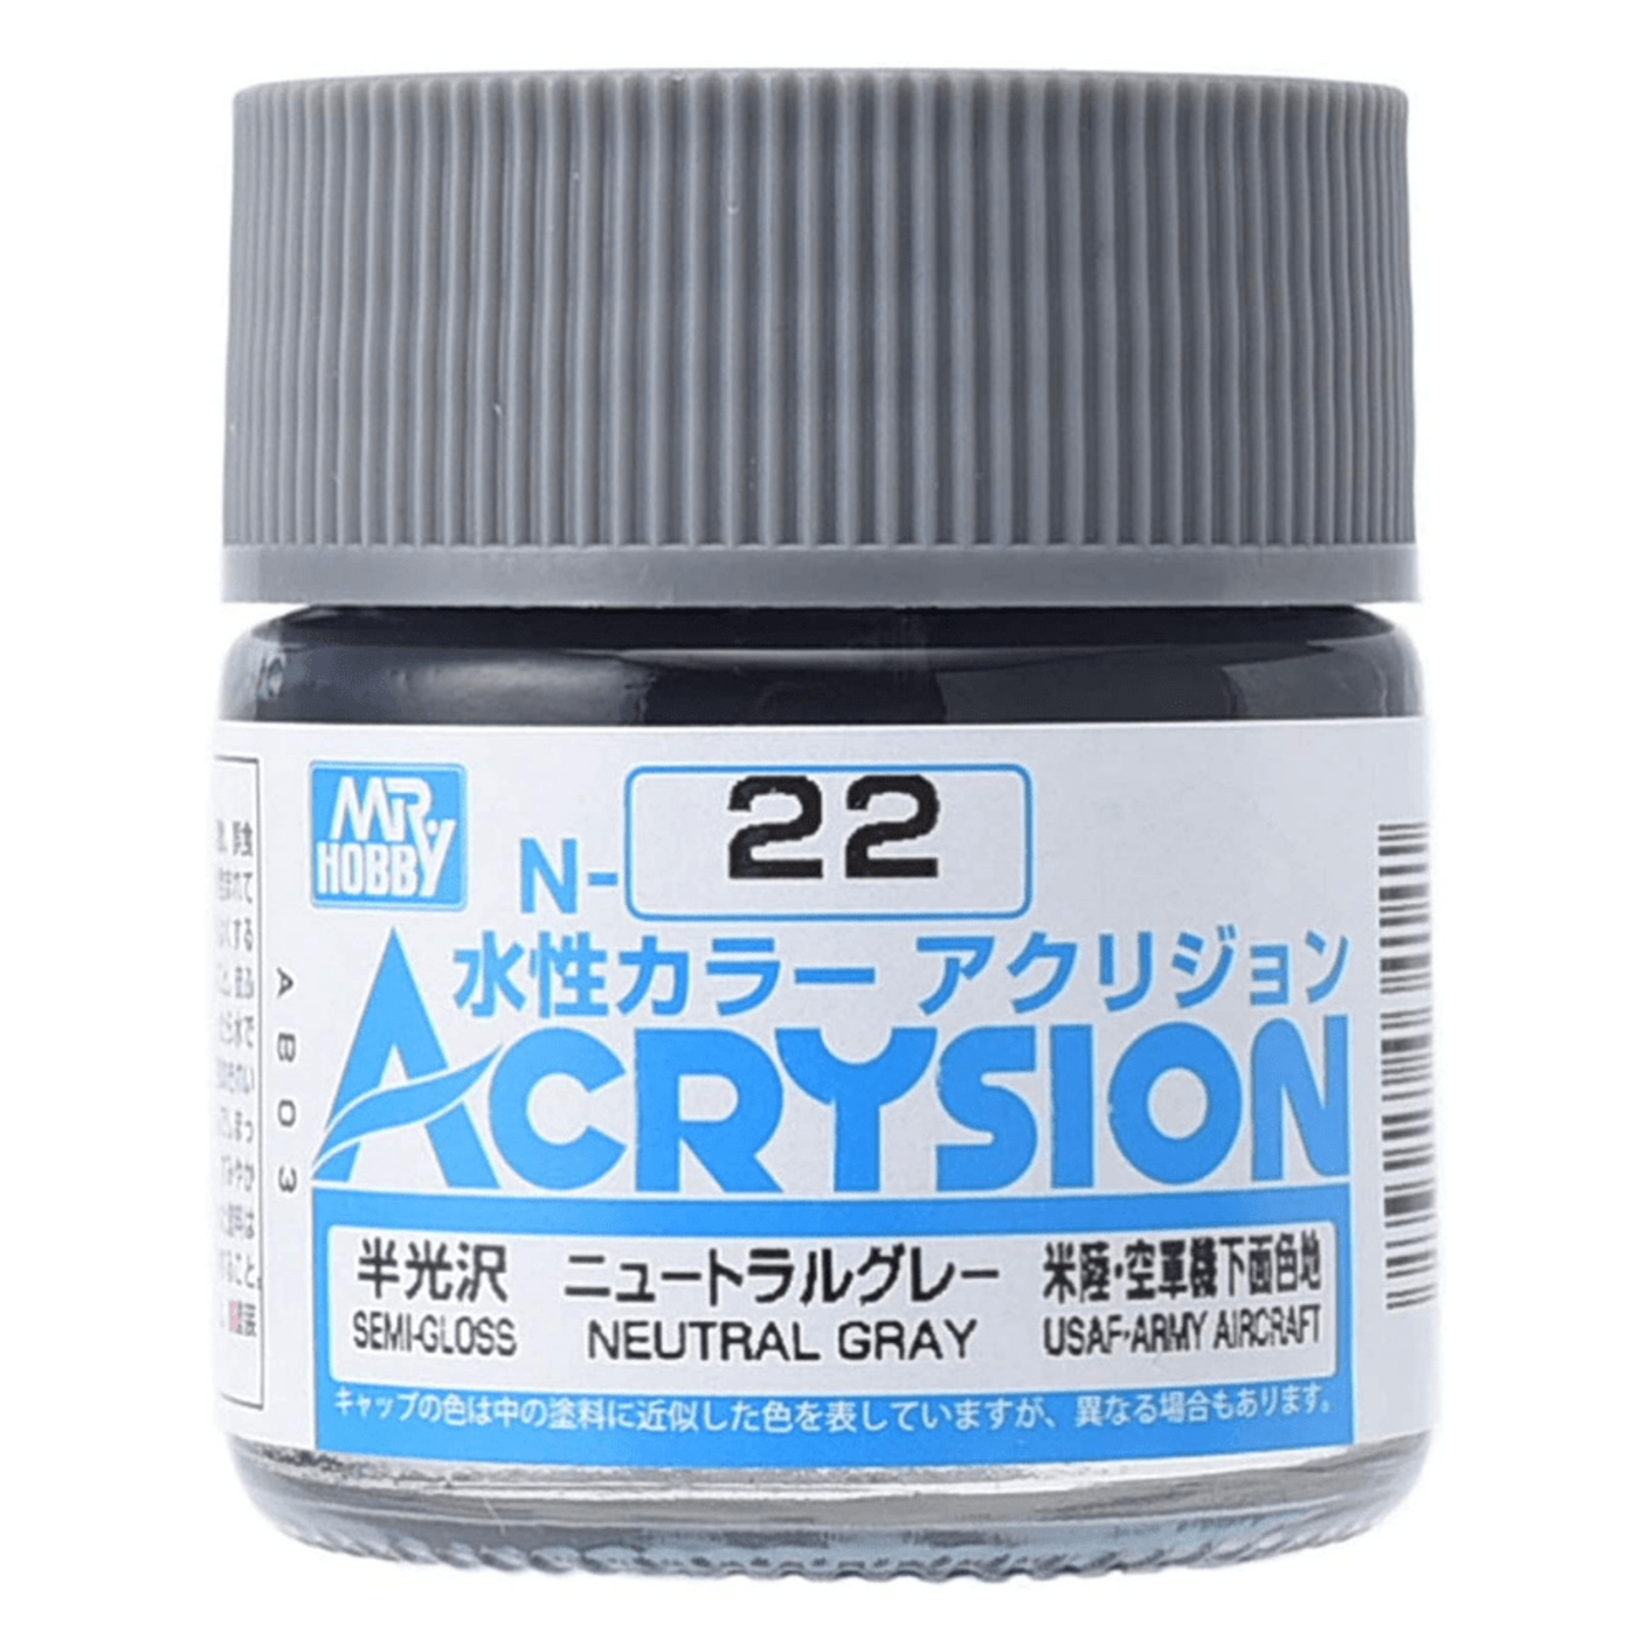 GSI Creos GNZ-N22 Mr Hobby N22 Acrysion Semi-Gloss Neutral Gray - Water-Based Acrylic - 10ml